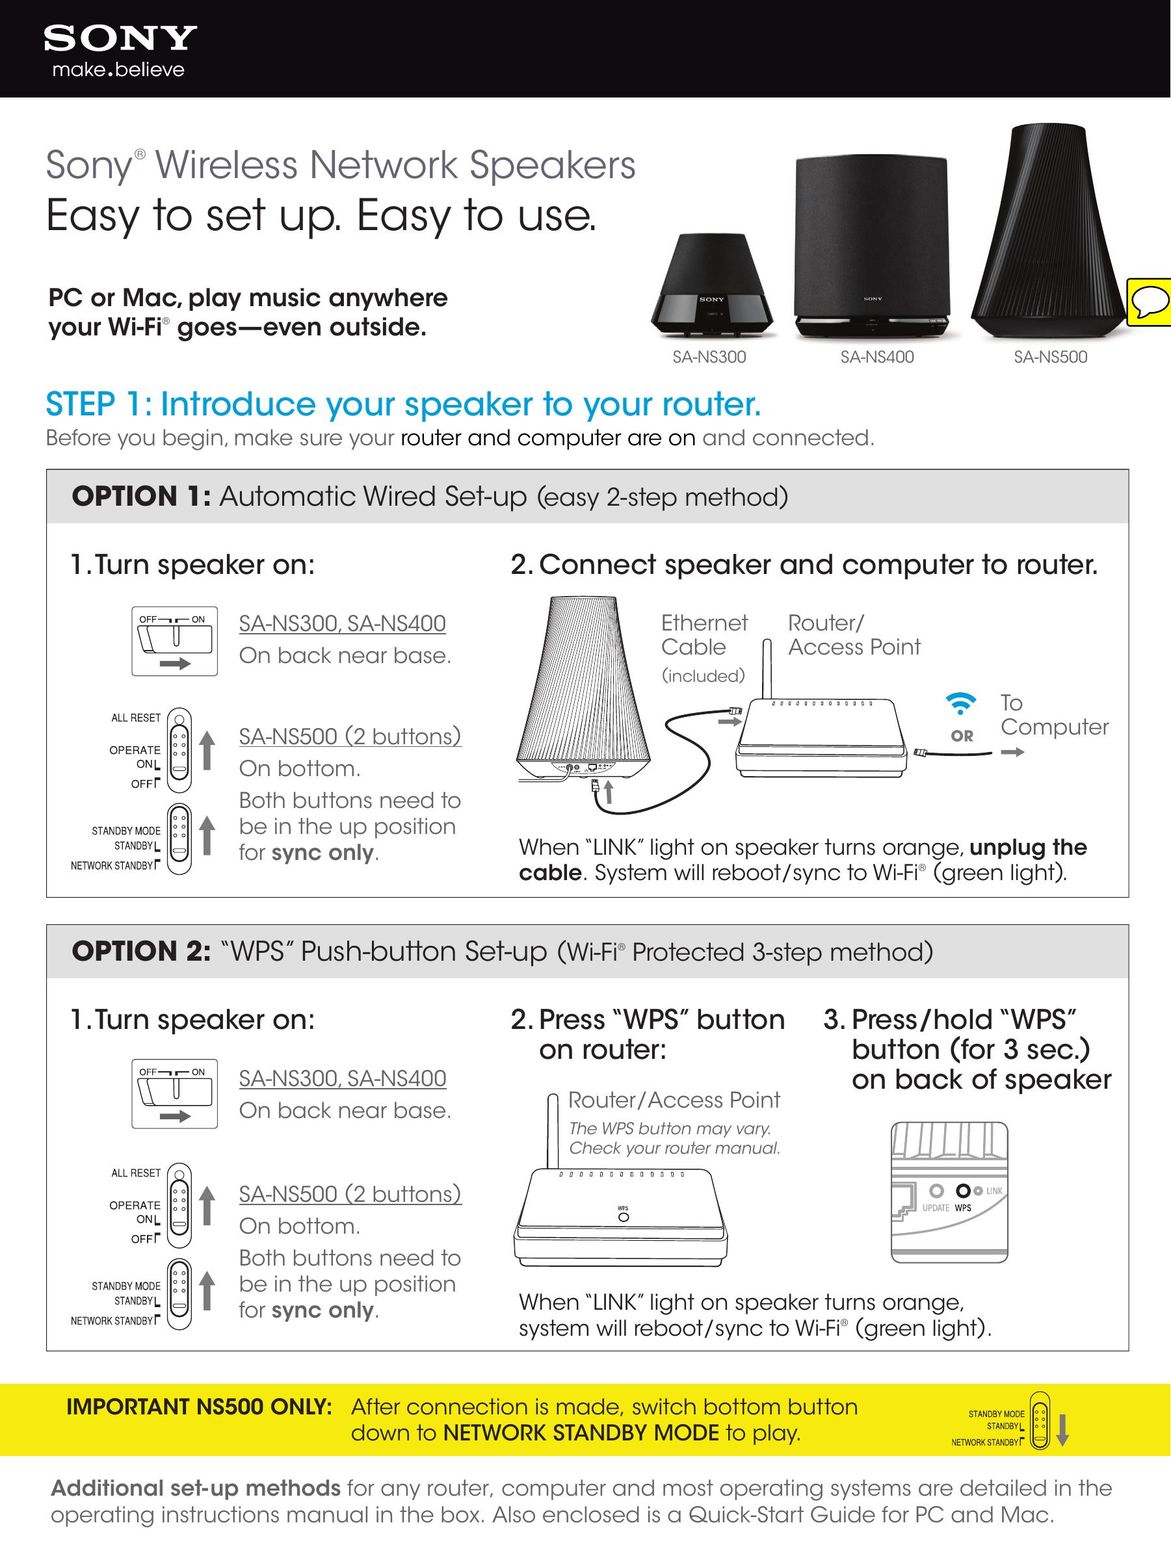 Sony SA-NS500 Speaker User Manual